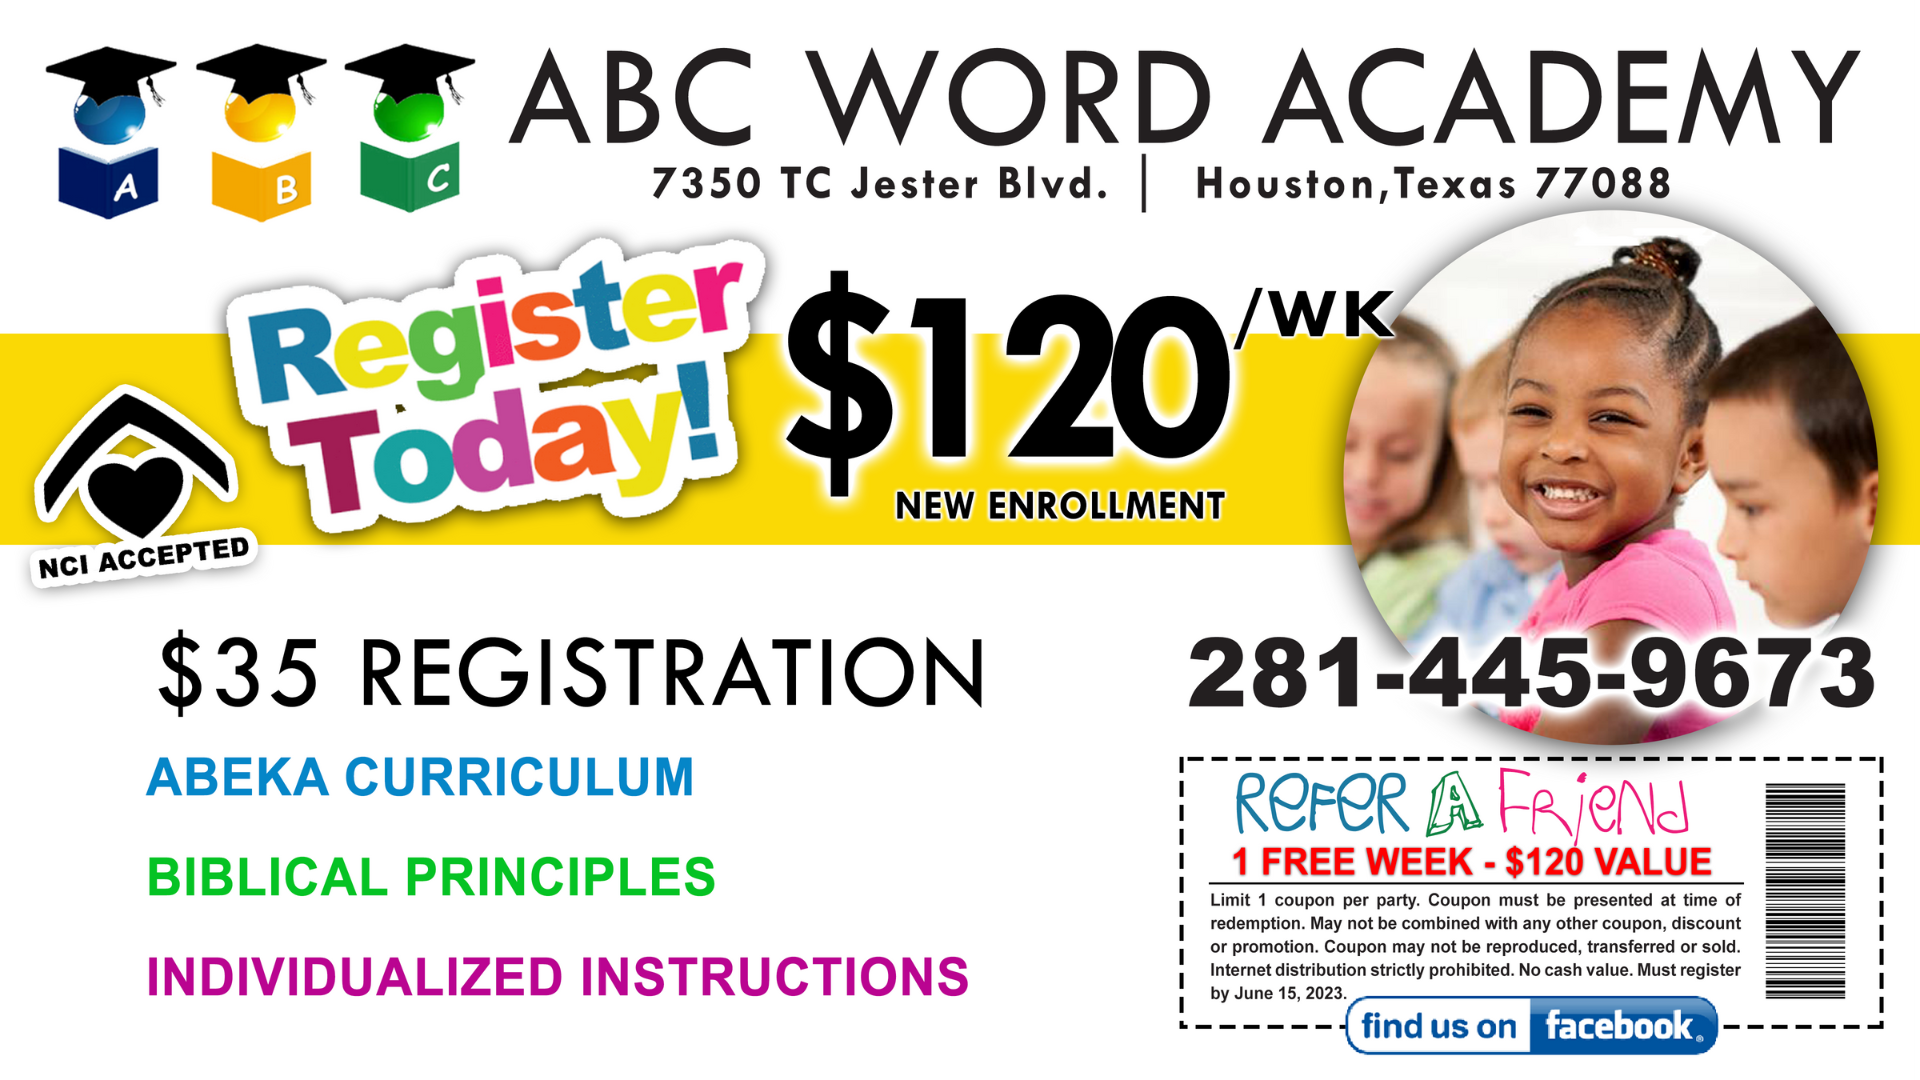 ABC Word Academy Childcare & Preschool head image